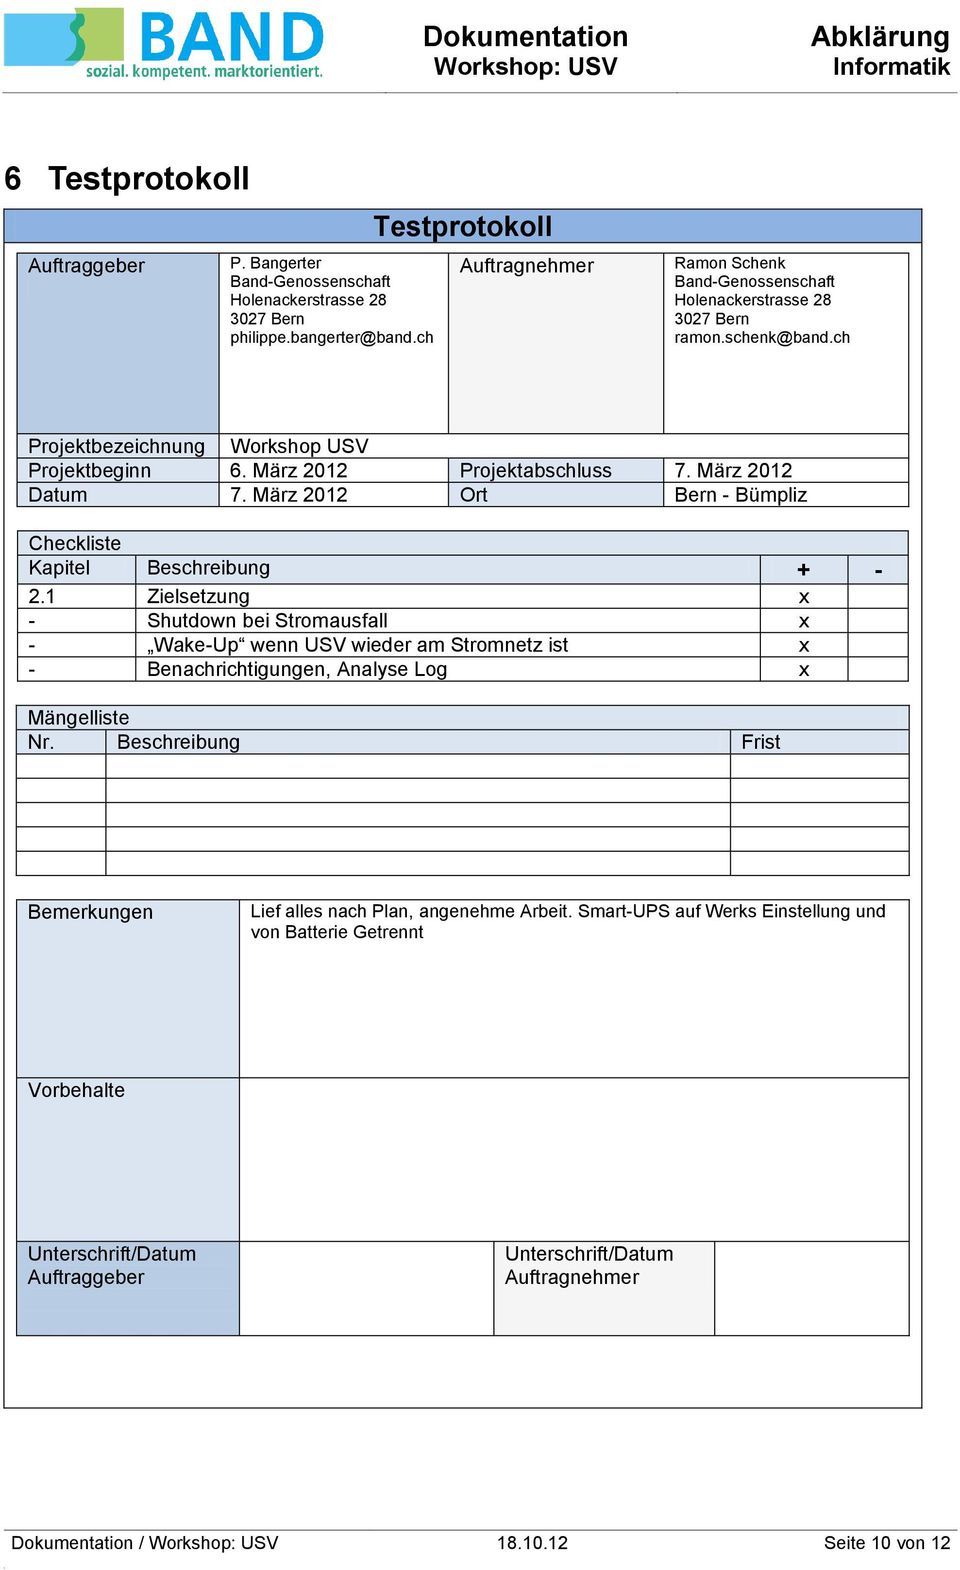 März 2012 Projektabschluss 7. März 2012 Datum 7. März 2012 Ort Bern - Bümpliz Checkliste Kapitel Beschreibung + - 2.